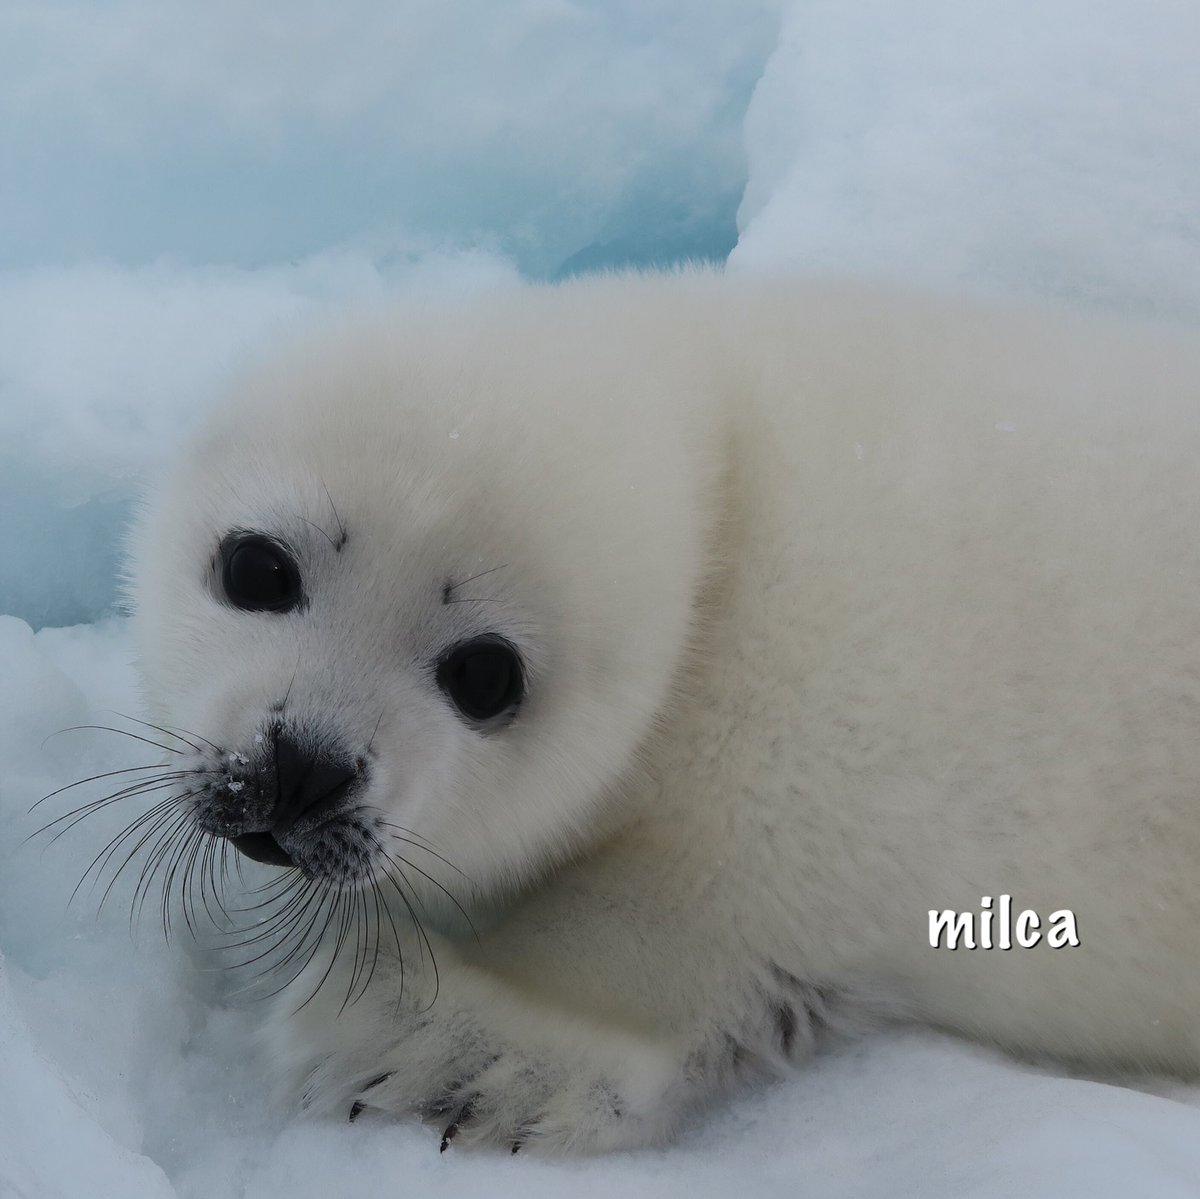 Milca アザラシの赤ちゃんは表情豊か どんな格好しても可愛い このもふもふの白い毛は生後2週間だけです 3 4 18 カナダ ケベック州 マドレーヌ島 アザラシ タテゴトアザラシ Canada Madeleine Harpseal Seal T Co Th8s7vvywr